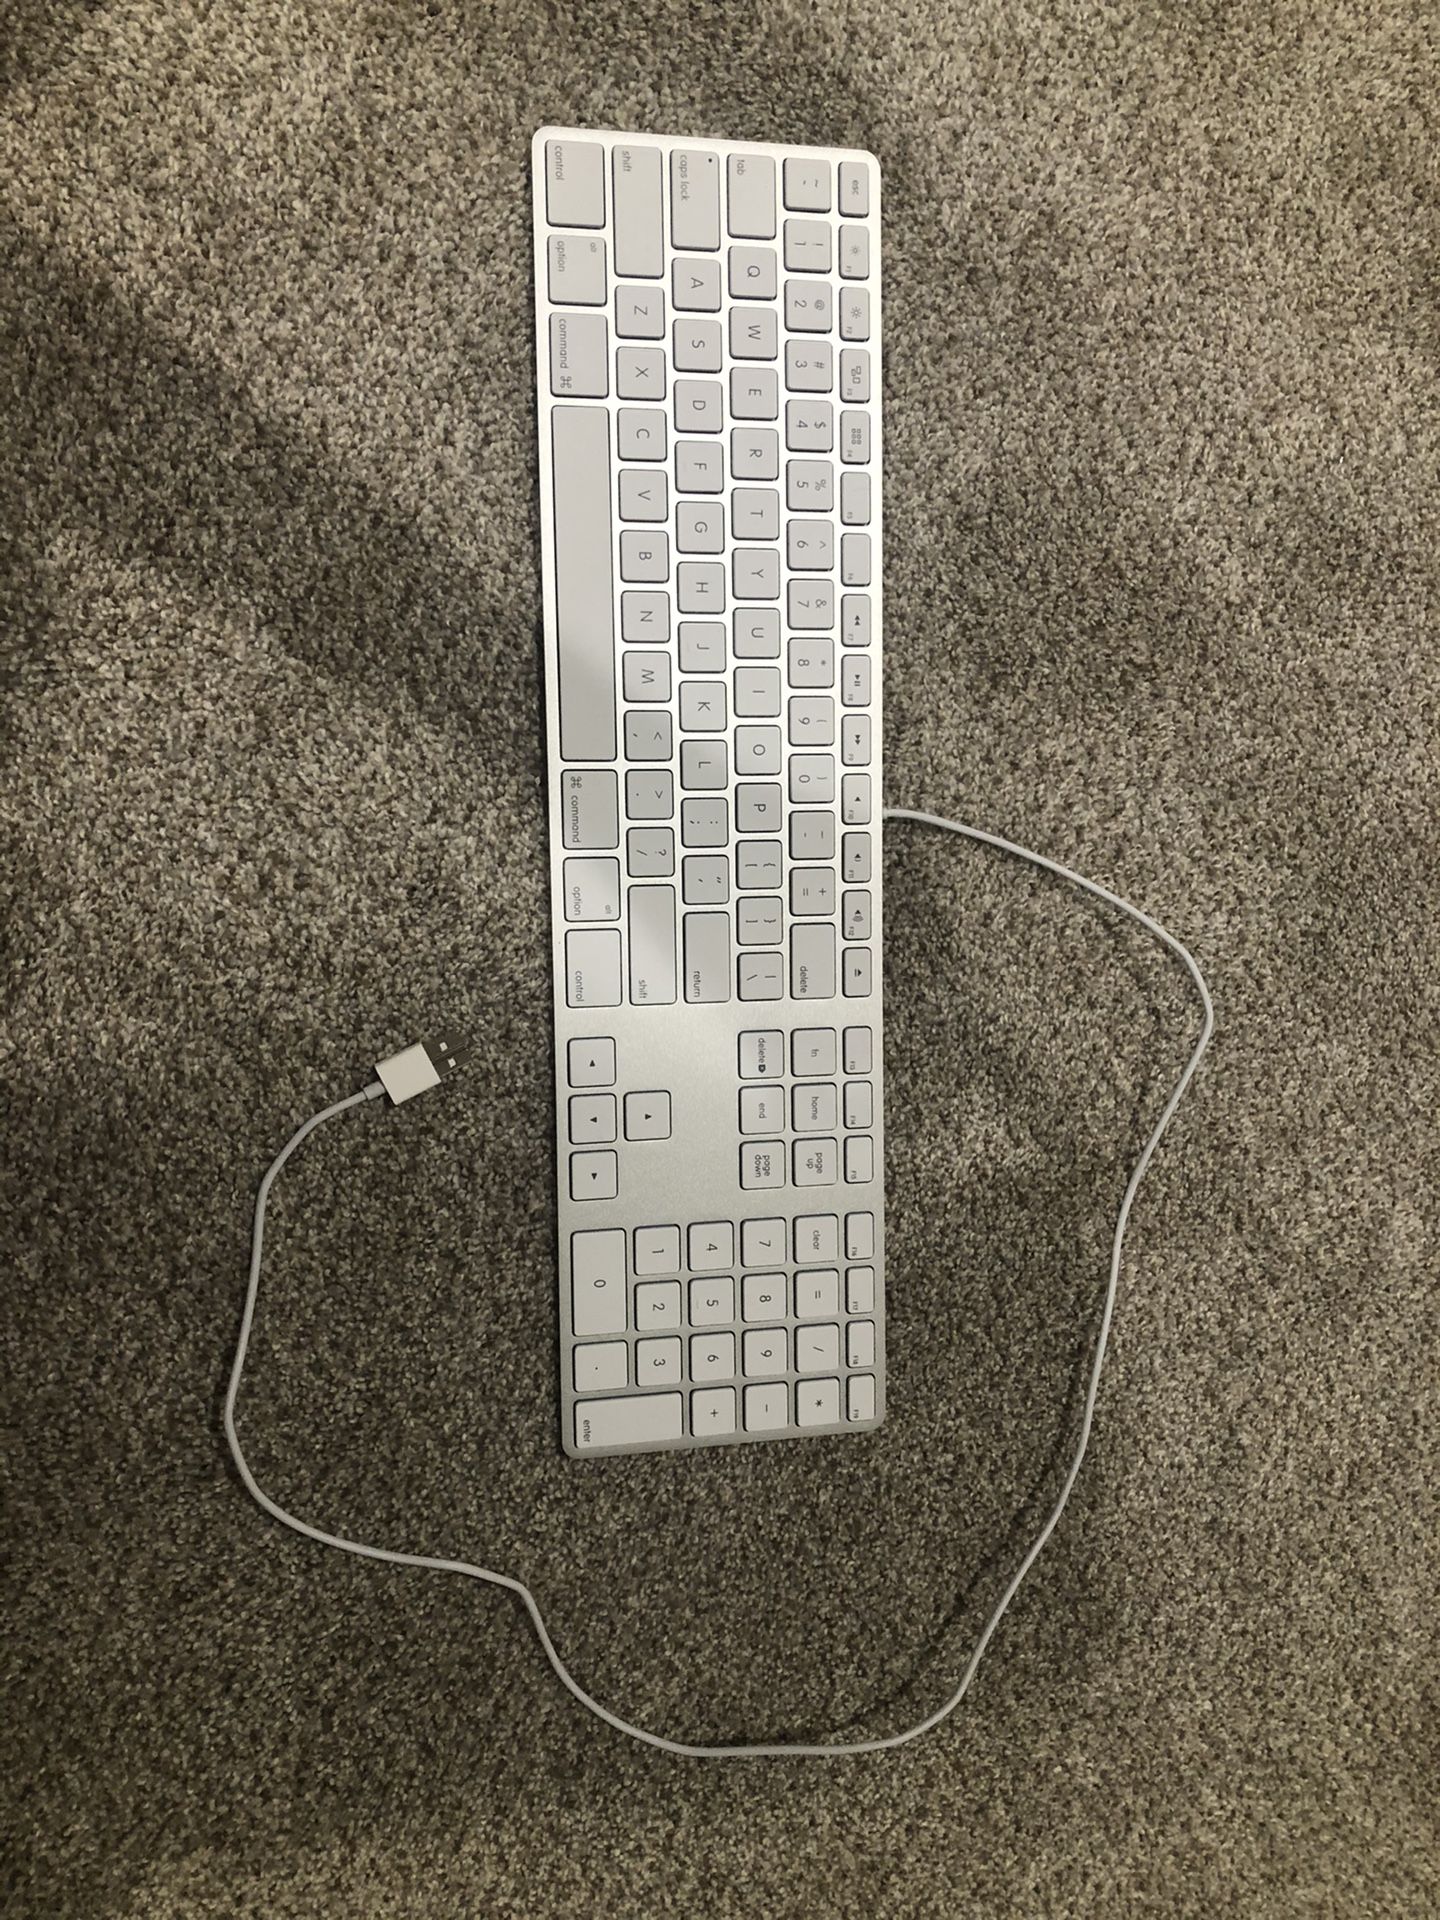 Apple aluminum keyboard